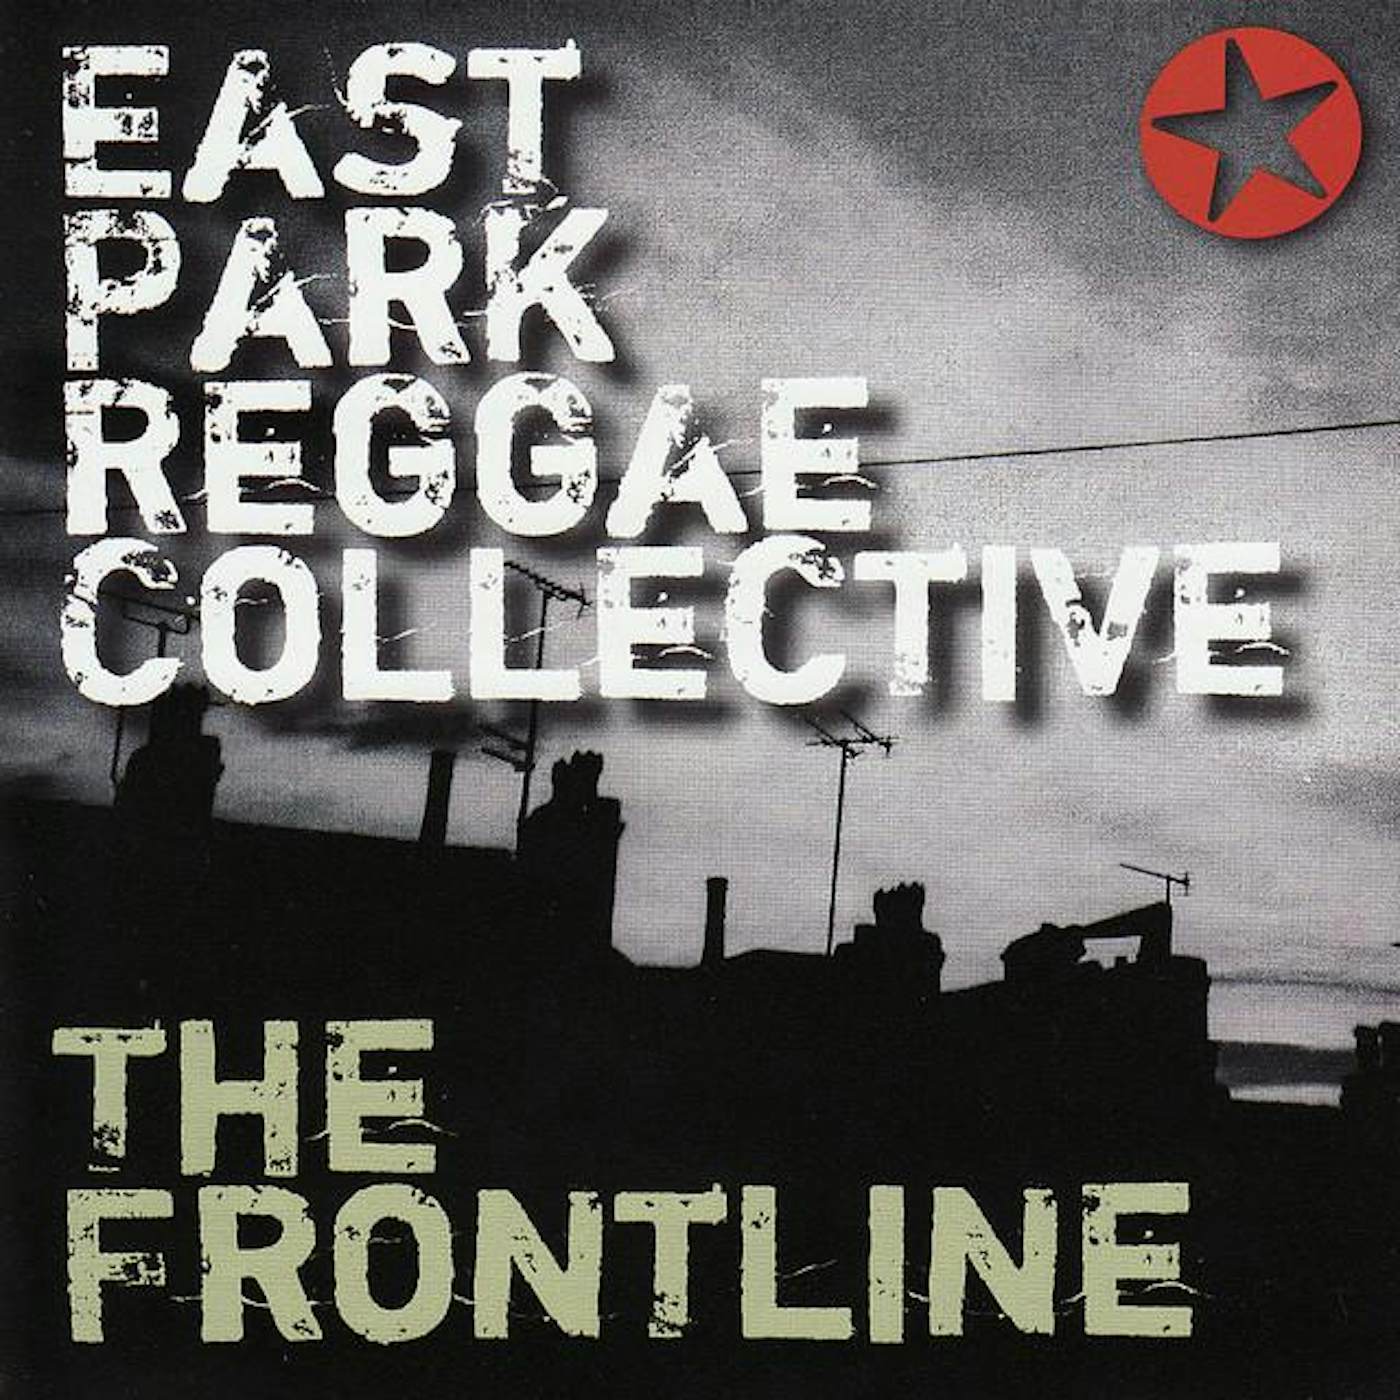 East Park Reggae Collective